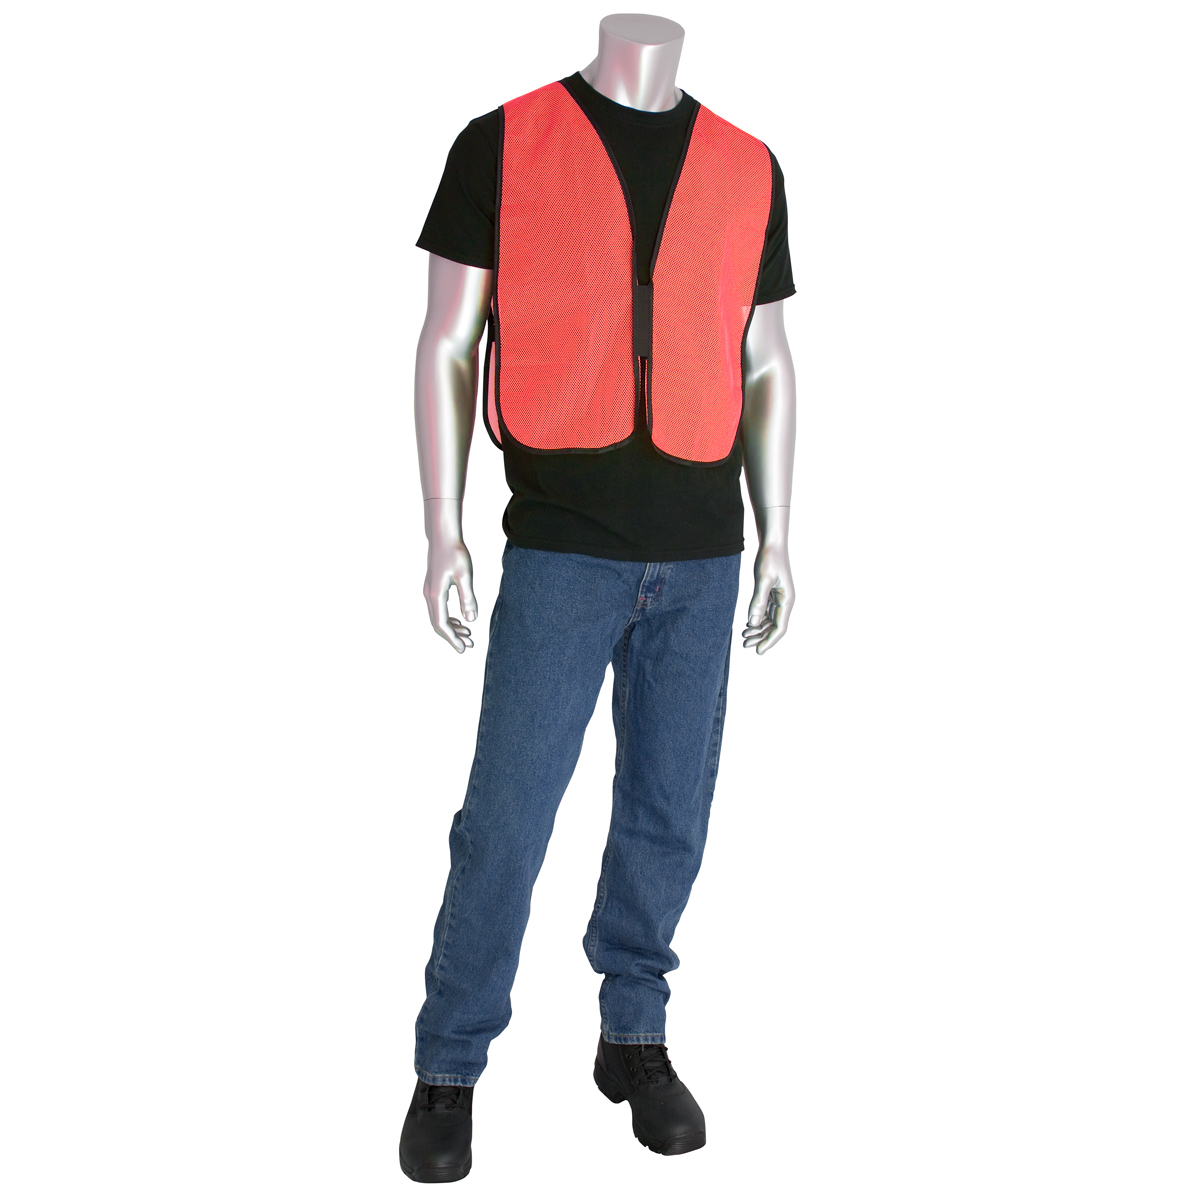 PIP® One Size Fits Most Hi-Vis Orange And Hi-Vis Yellow Mesh Safety Vest